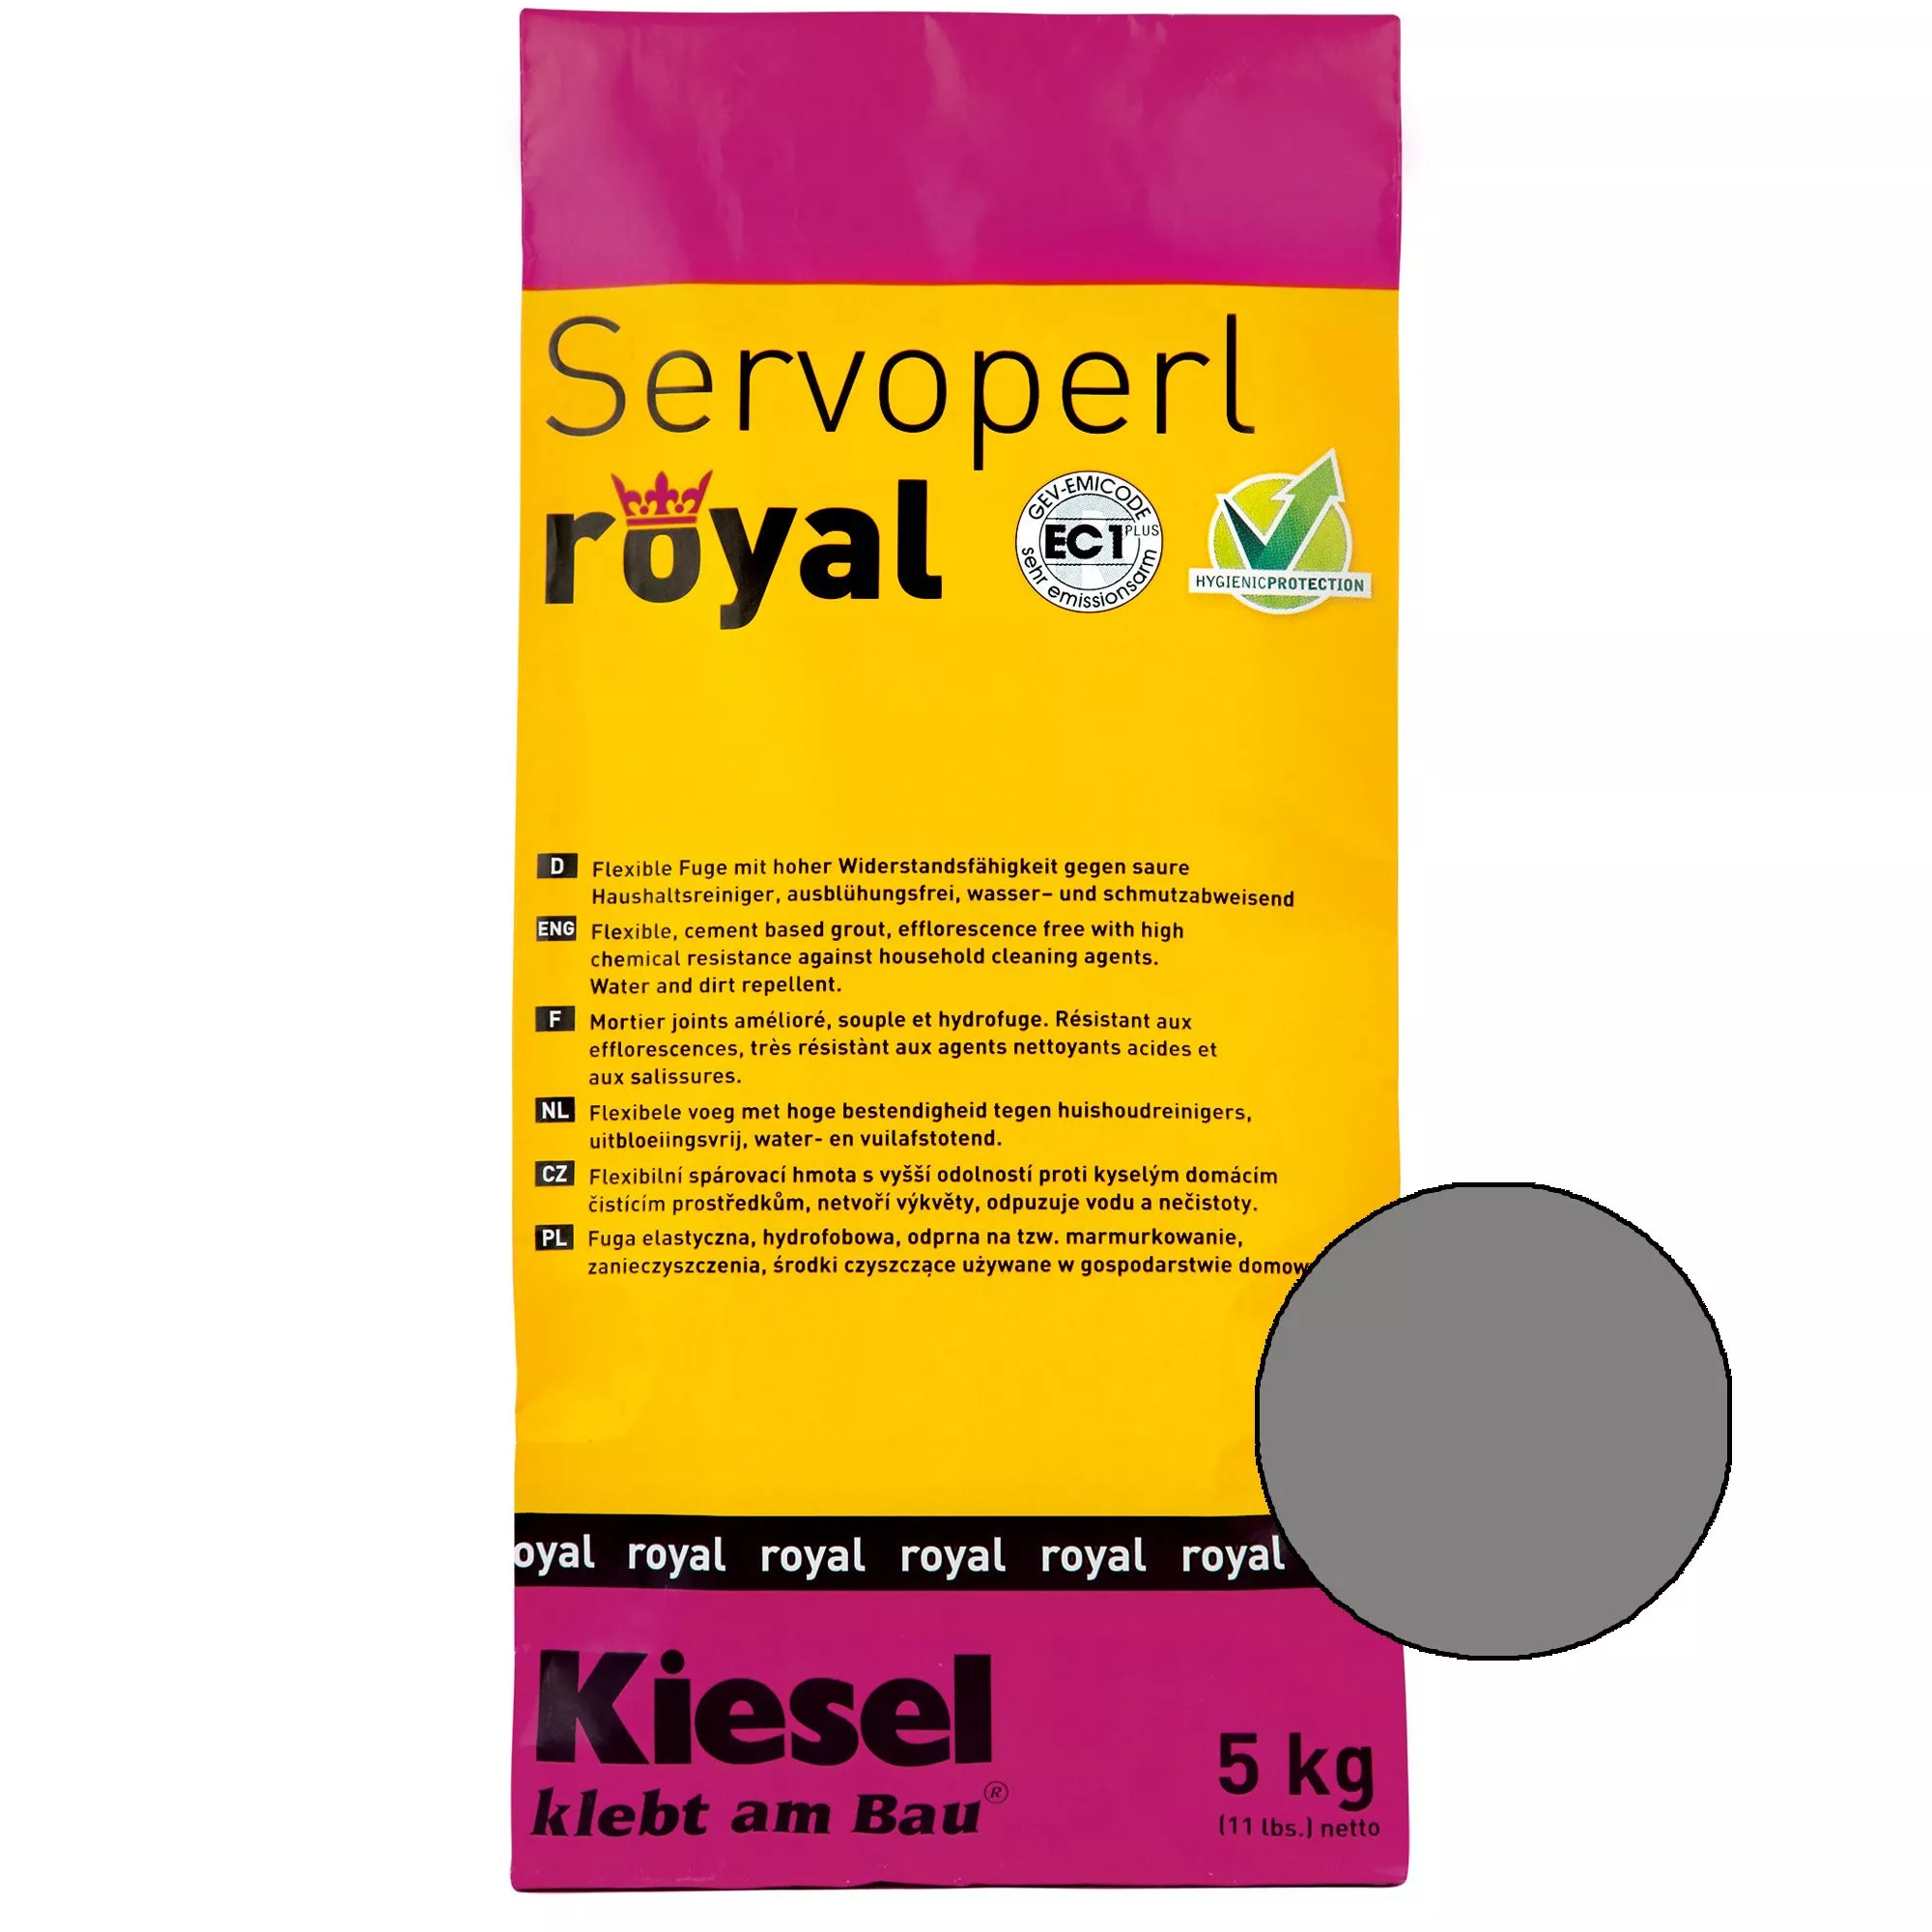 Kiesel Servoperl Royal - Elastyczna, Wodoodporna I Odporna Na Zabrudzenia Spoina (5KG średnioszary)